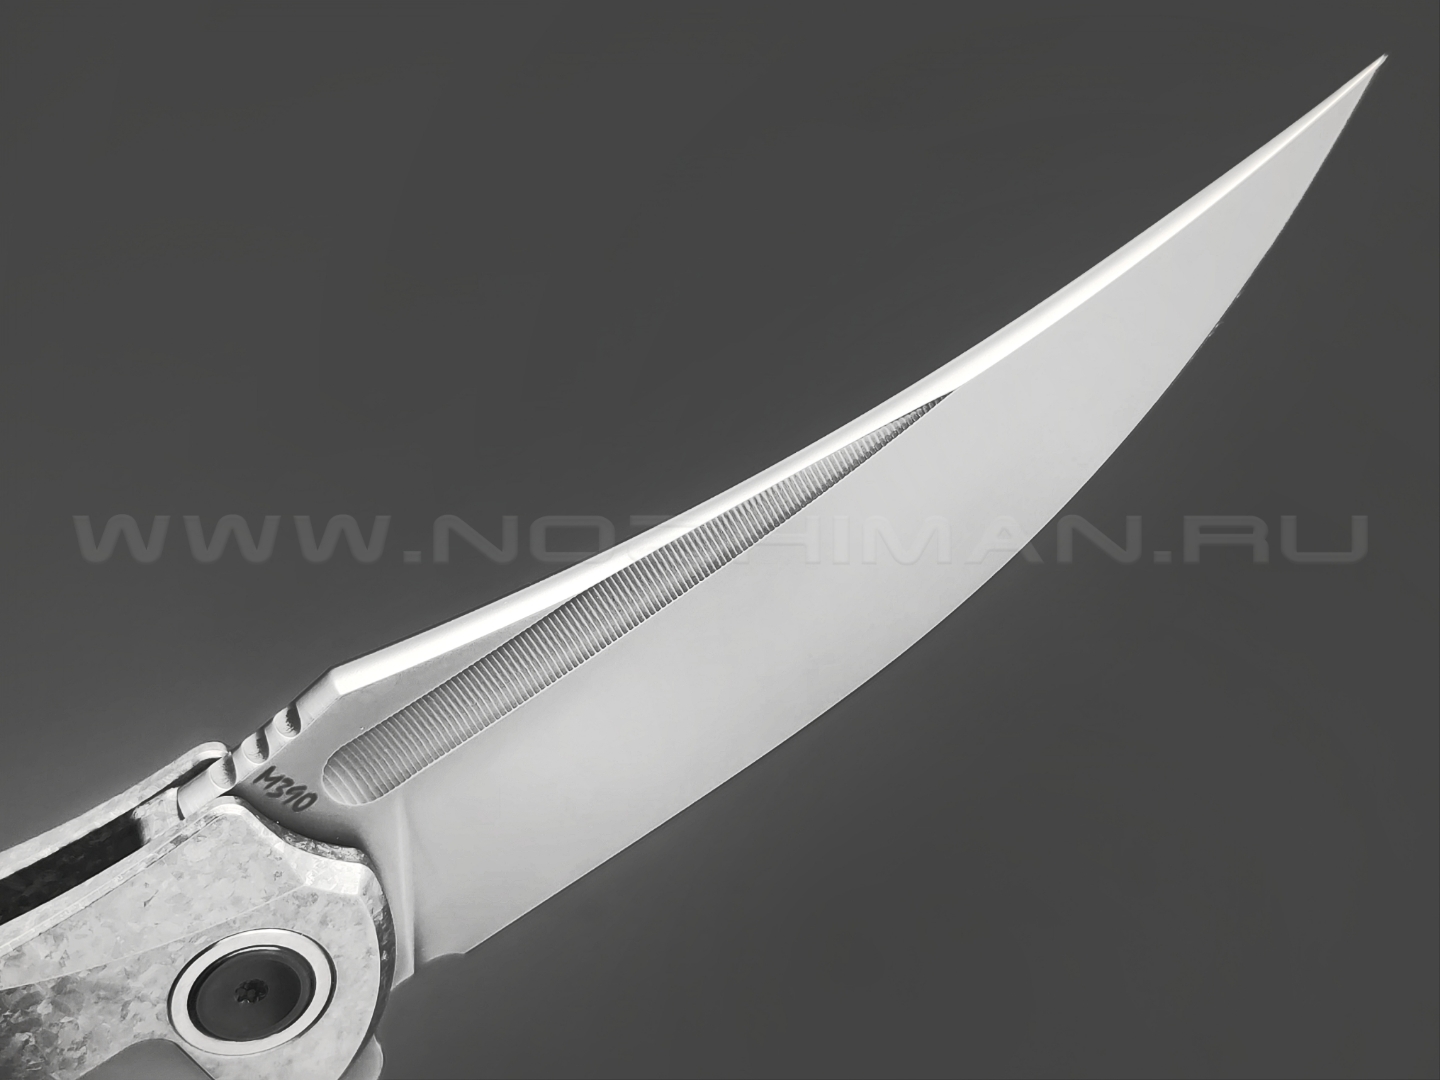 TuoTown нож Alatus-1 Integral сталь M390 bead-blast, рукоять Titanium Crystal Grey